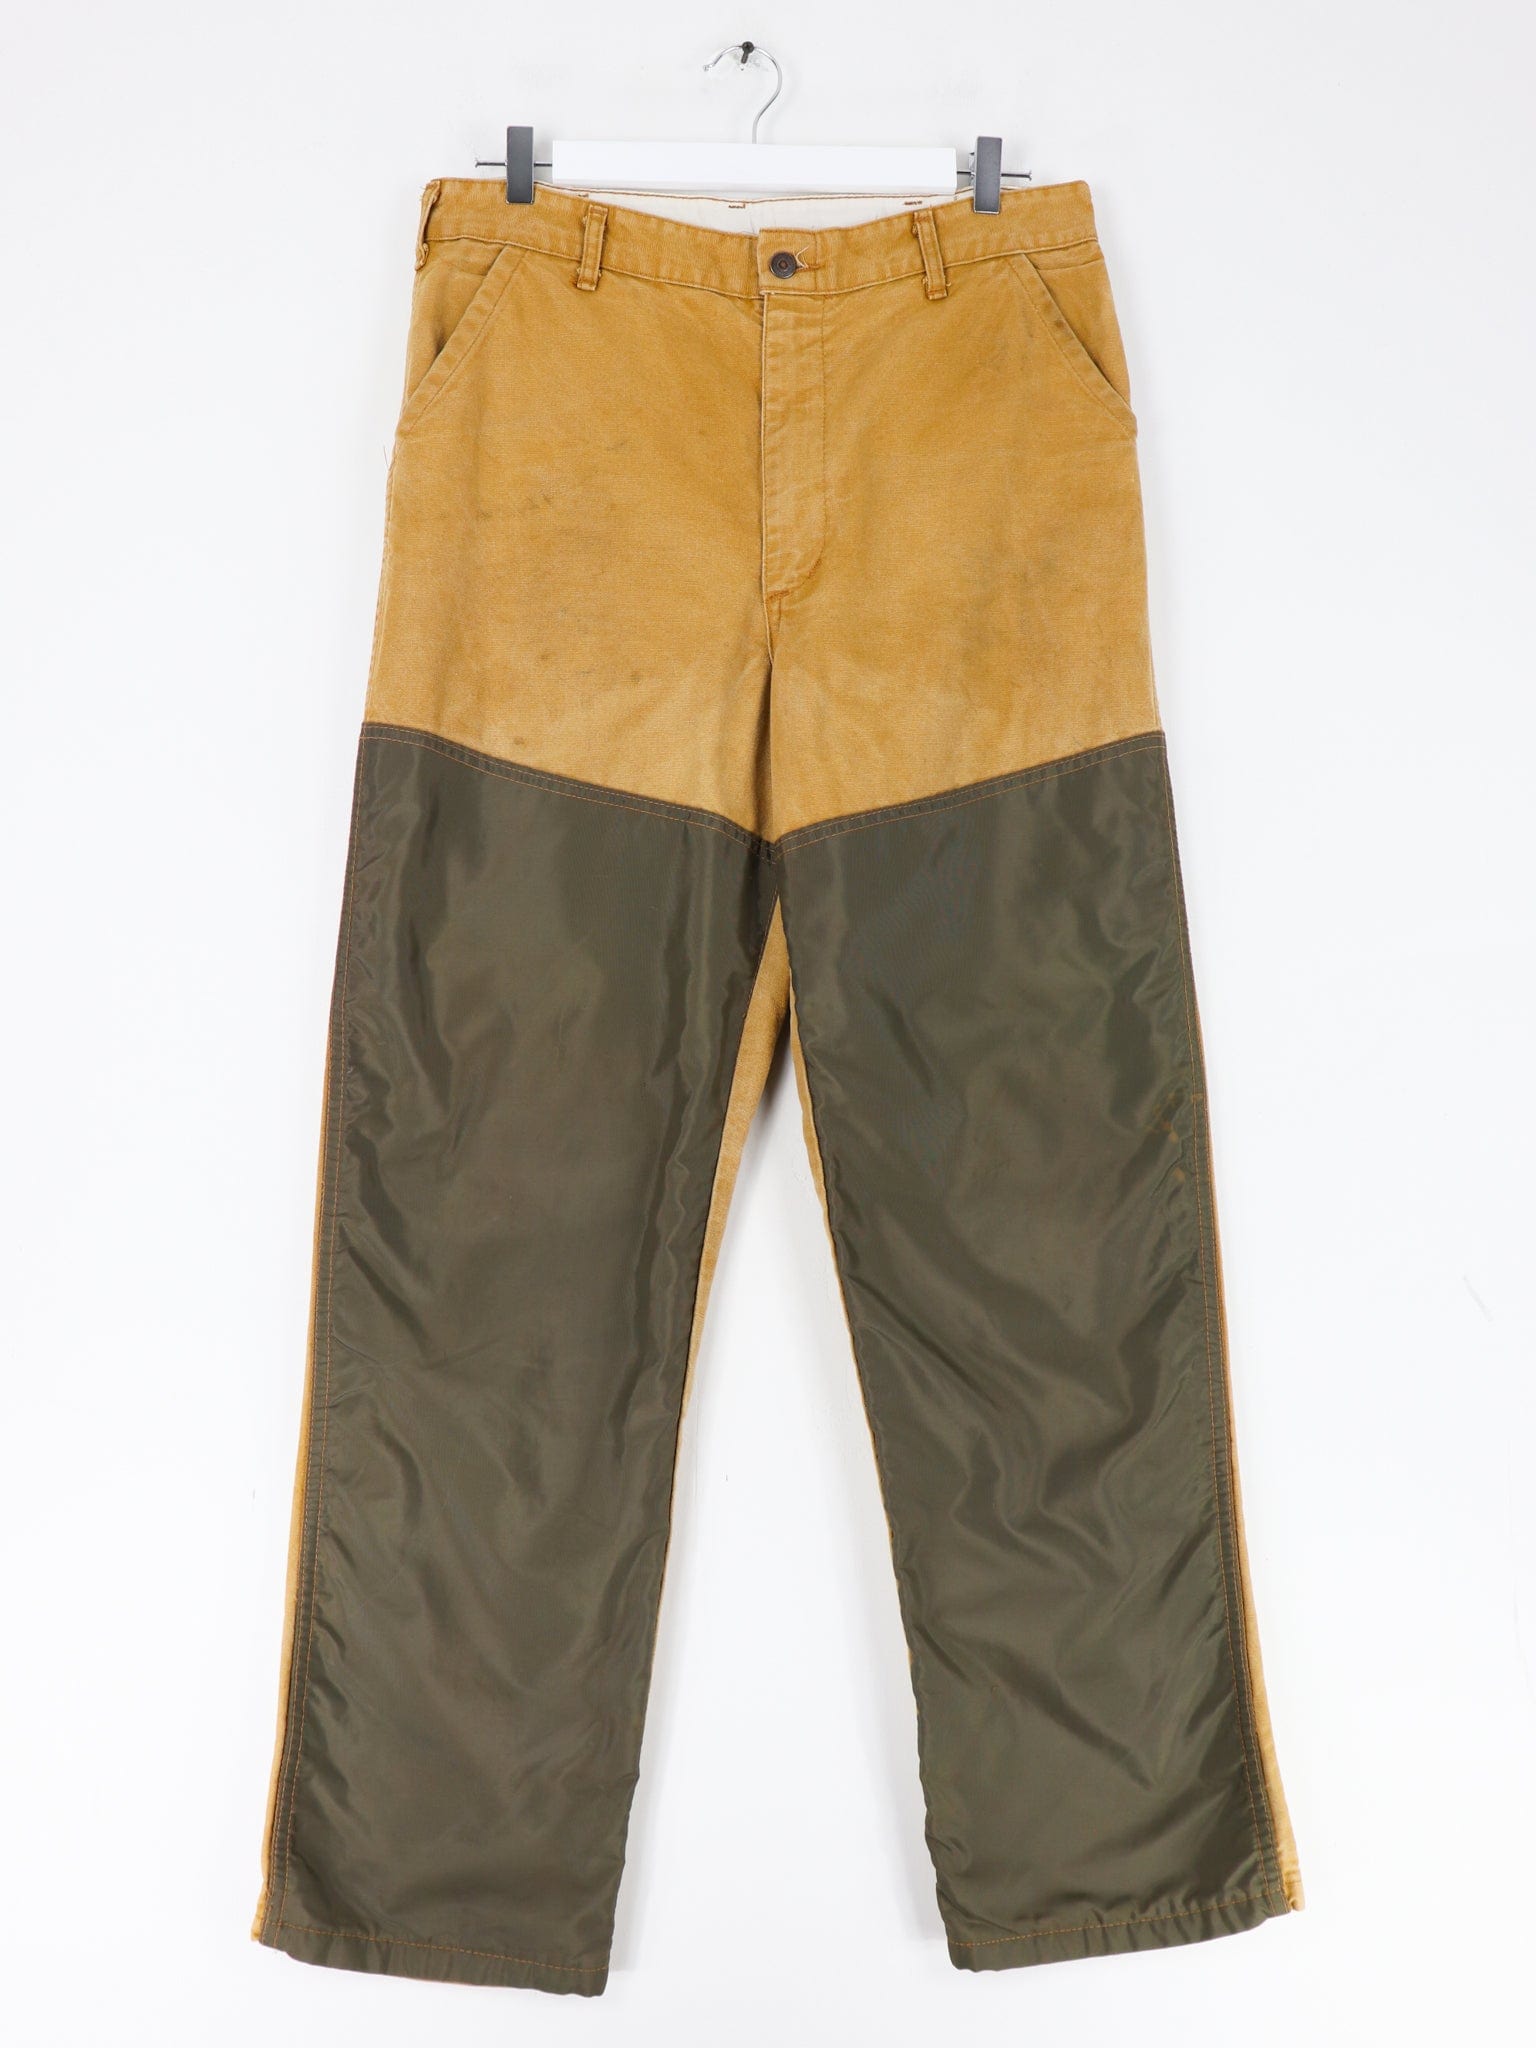 Other Pants Vintage Saftbak Hunting Pants Size 34 x 31